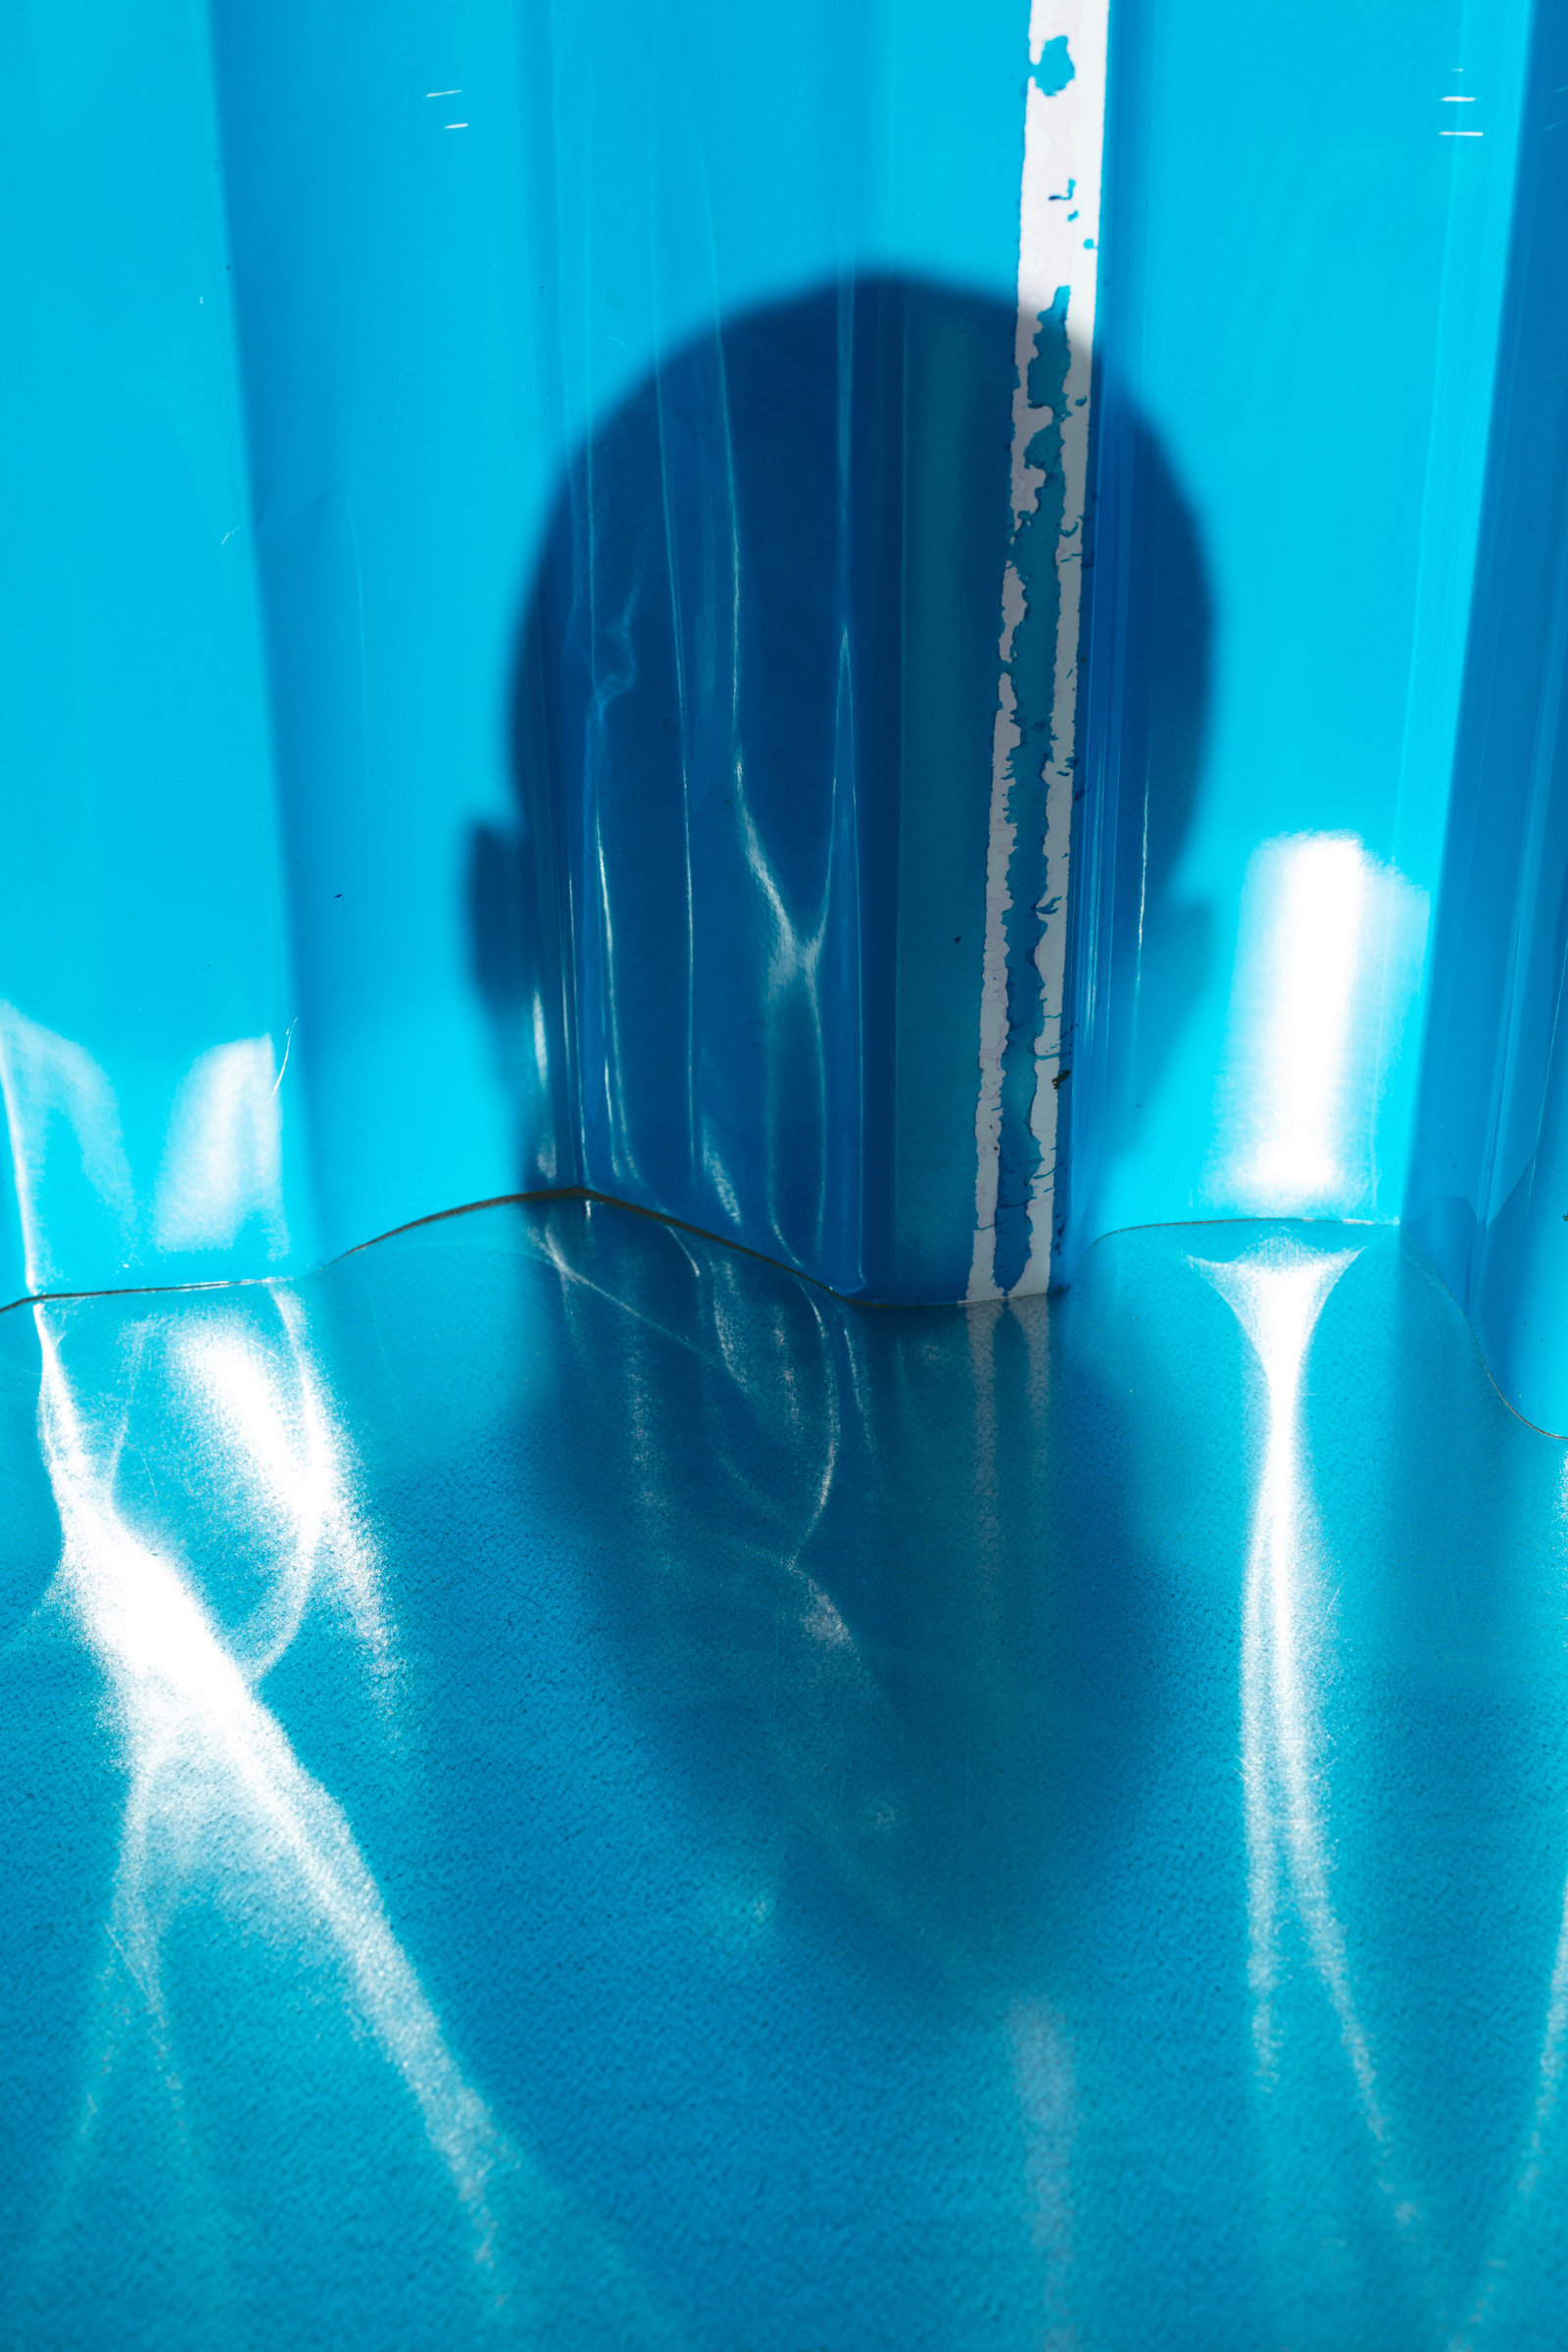 Wolfgang Tillmans, blue self-portrait shadow, 2020. Courtesy of the artist, David Zwirner, New York/Hong Kong, Galerie Buchholz, Berlin/Cologne, and Maureen Paley, London